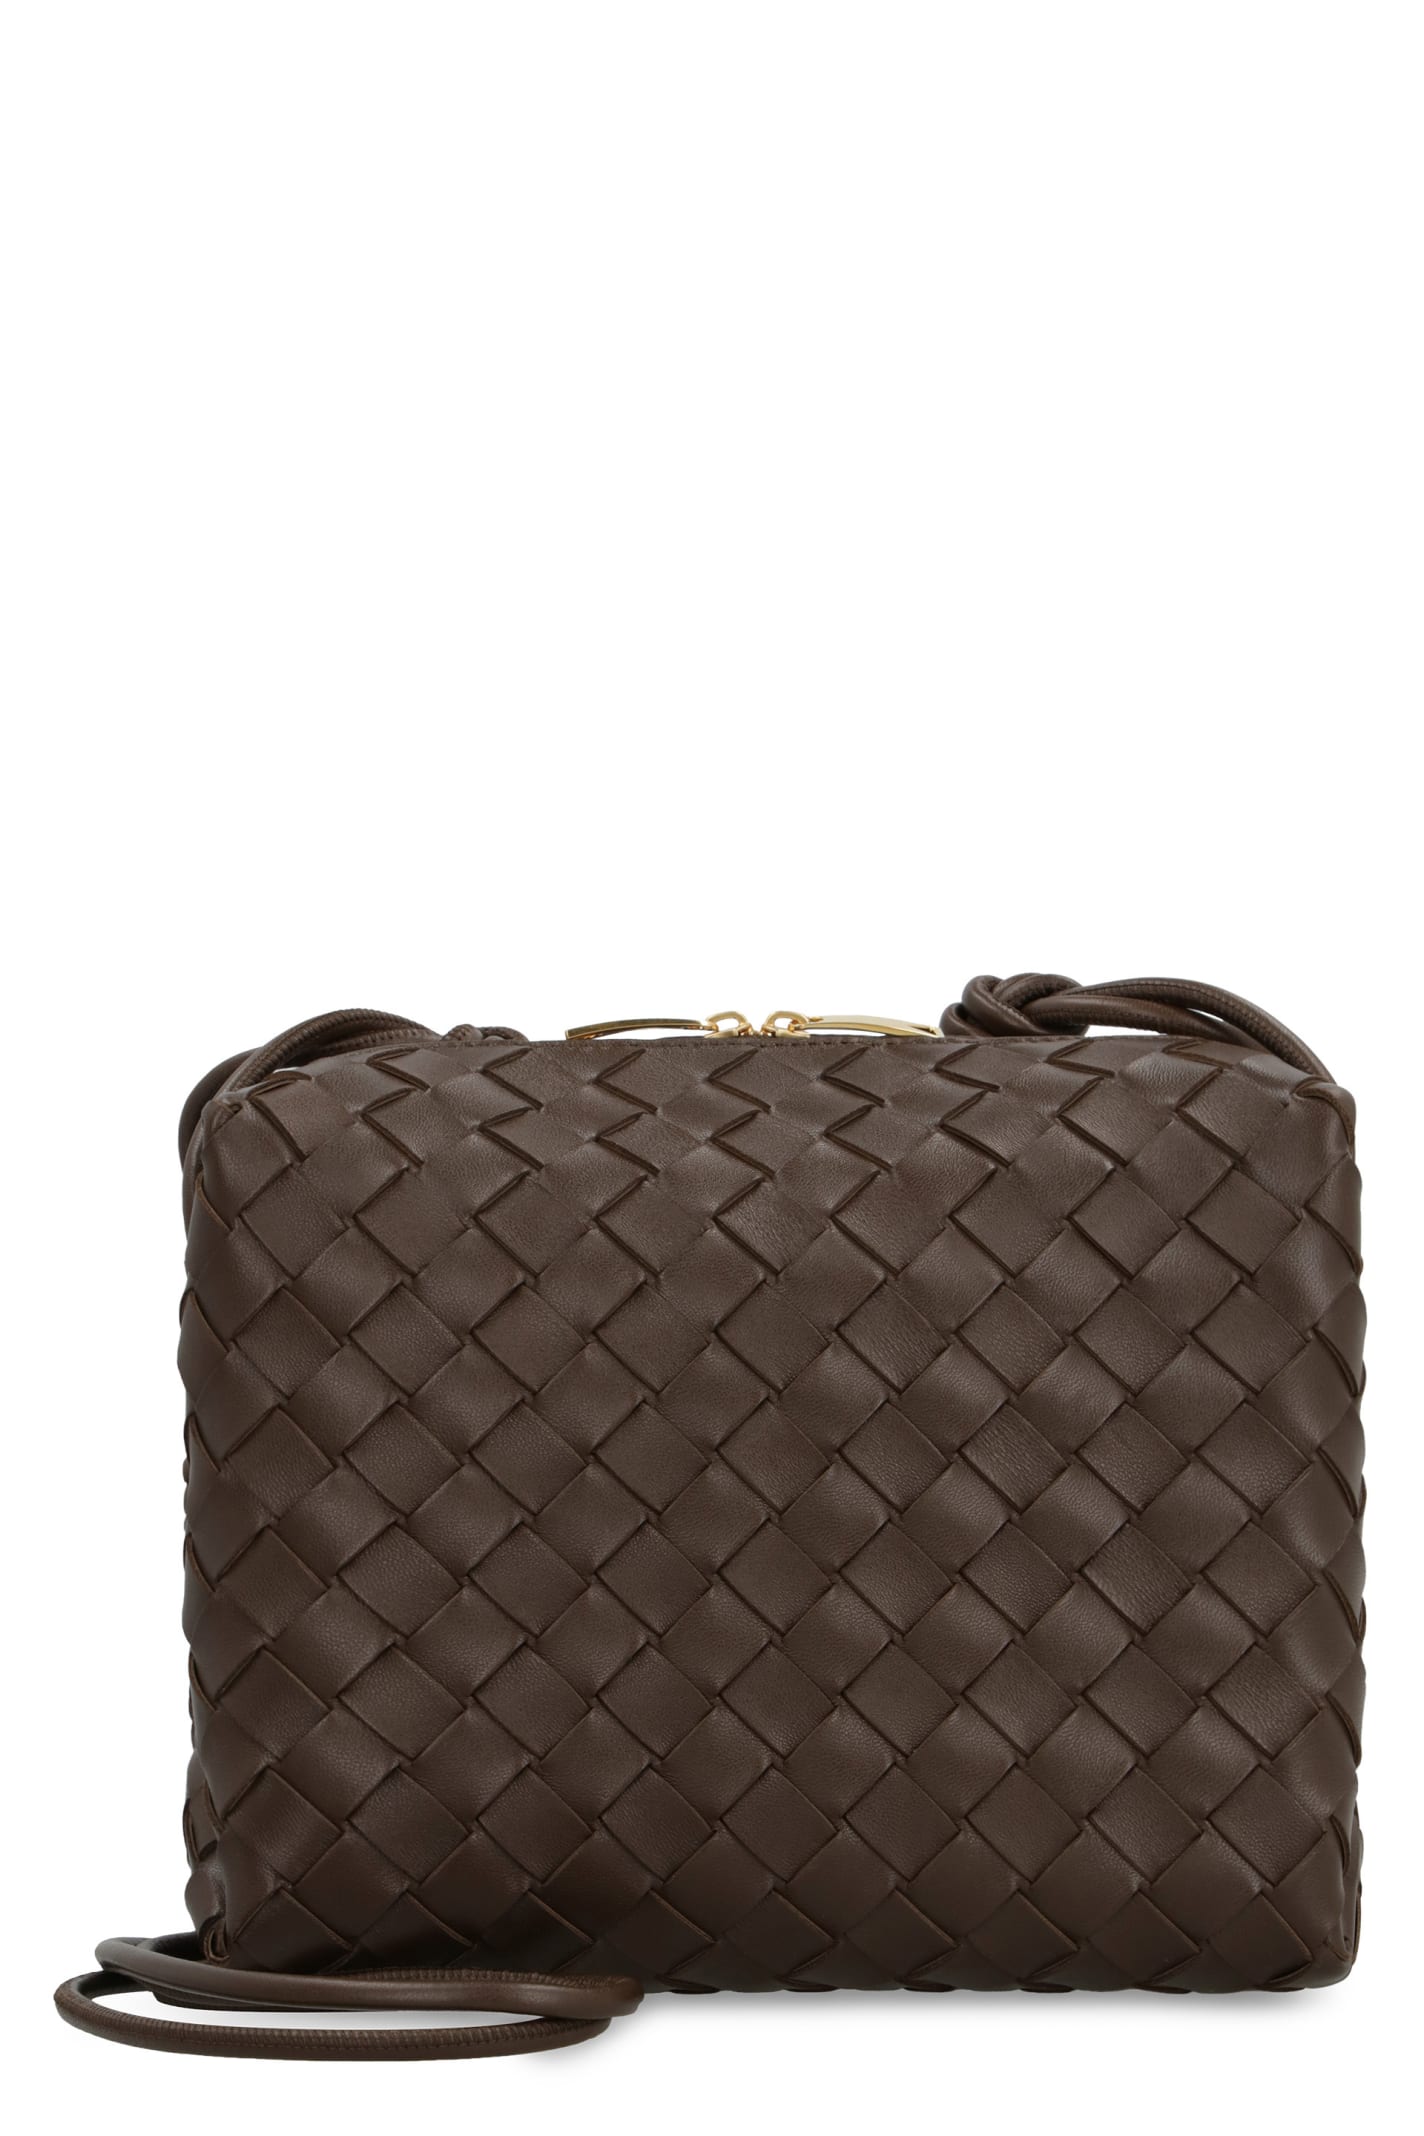 Bottega Veneta Loop Leather Shoulder Bag